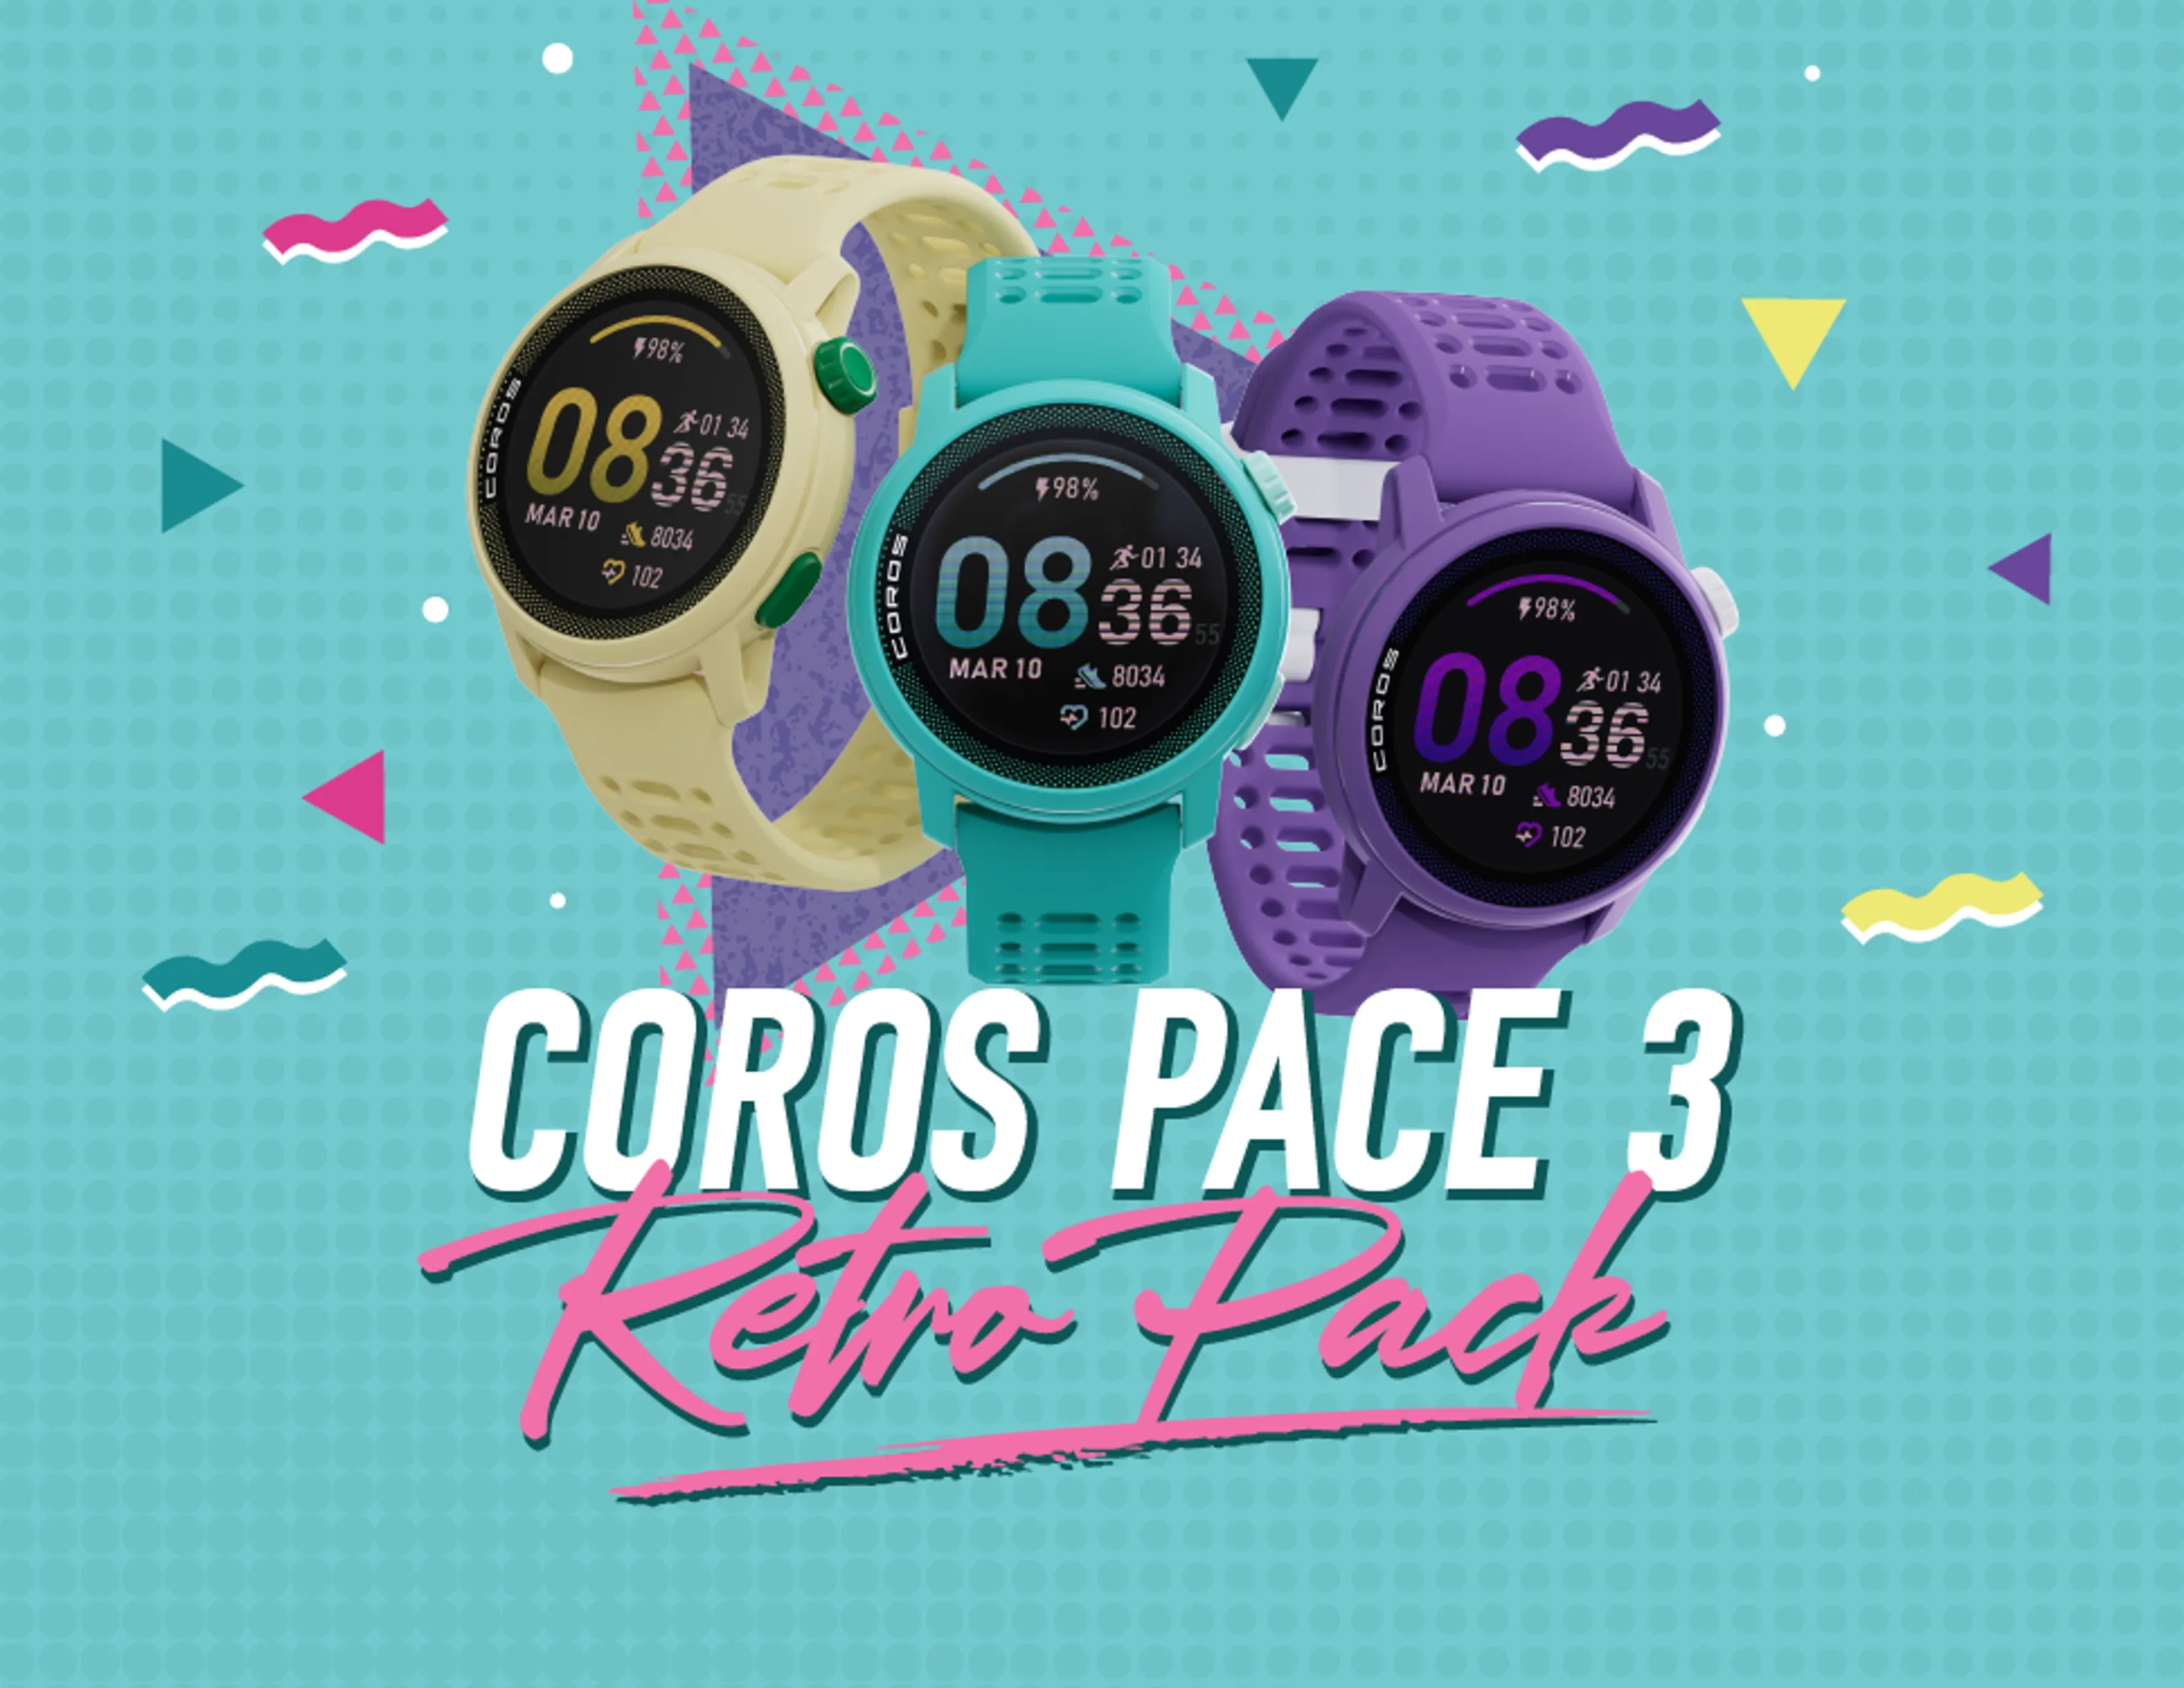 New Retro Style COROS PACE 3's